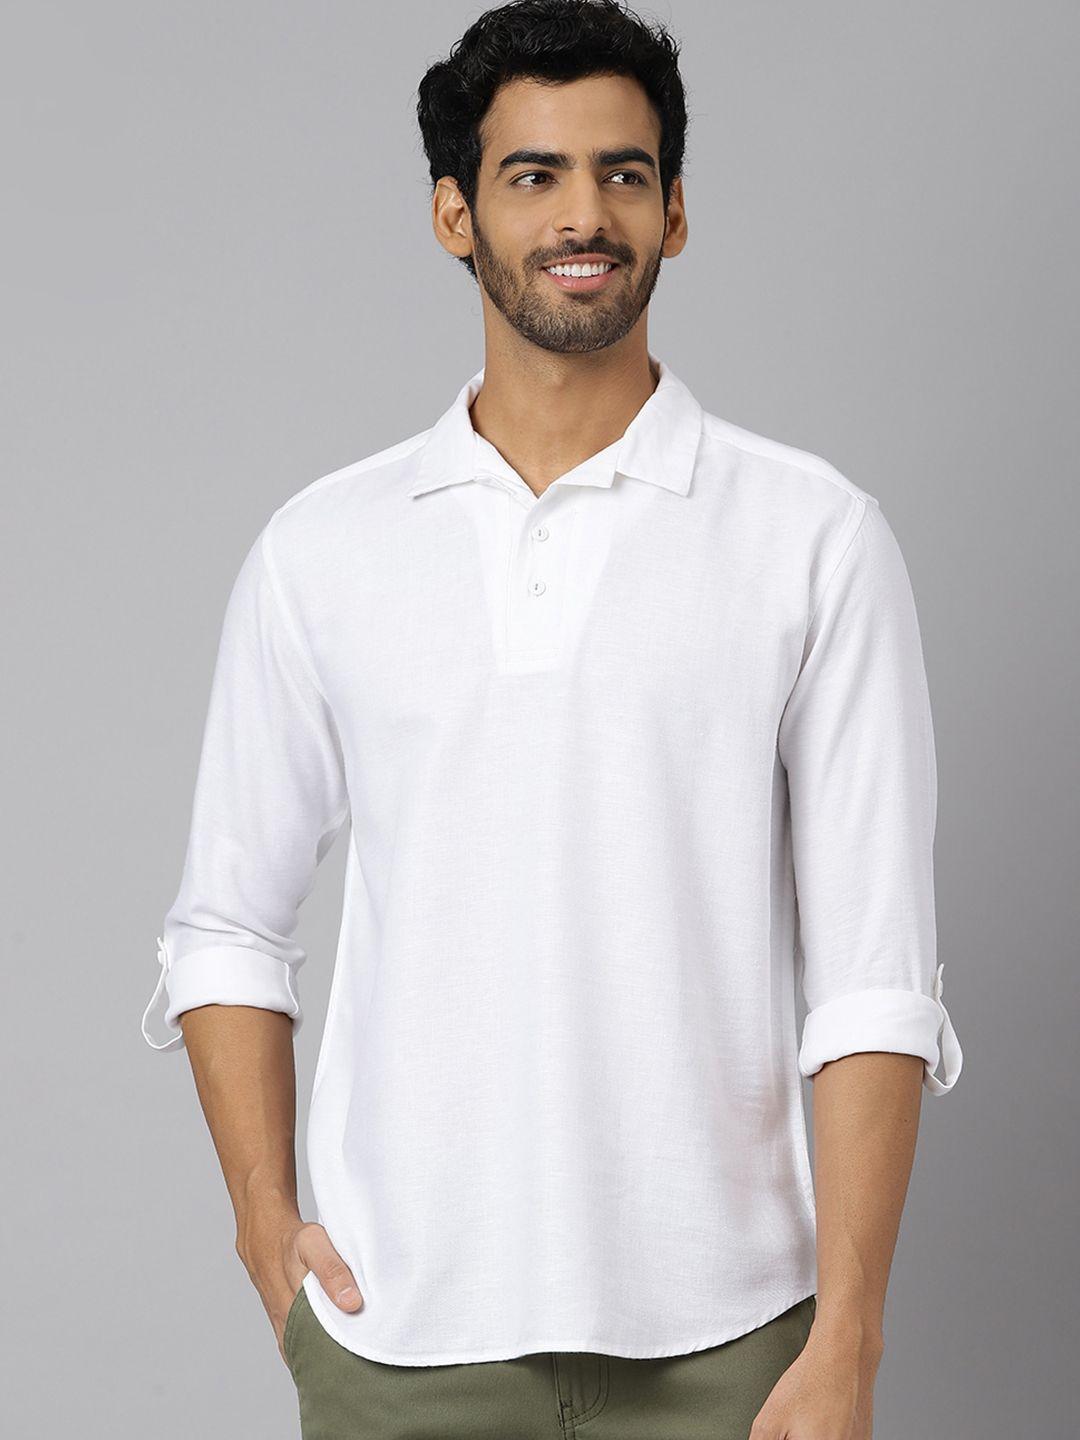 kingdom of white opaque cotton linen casual shirt